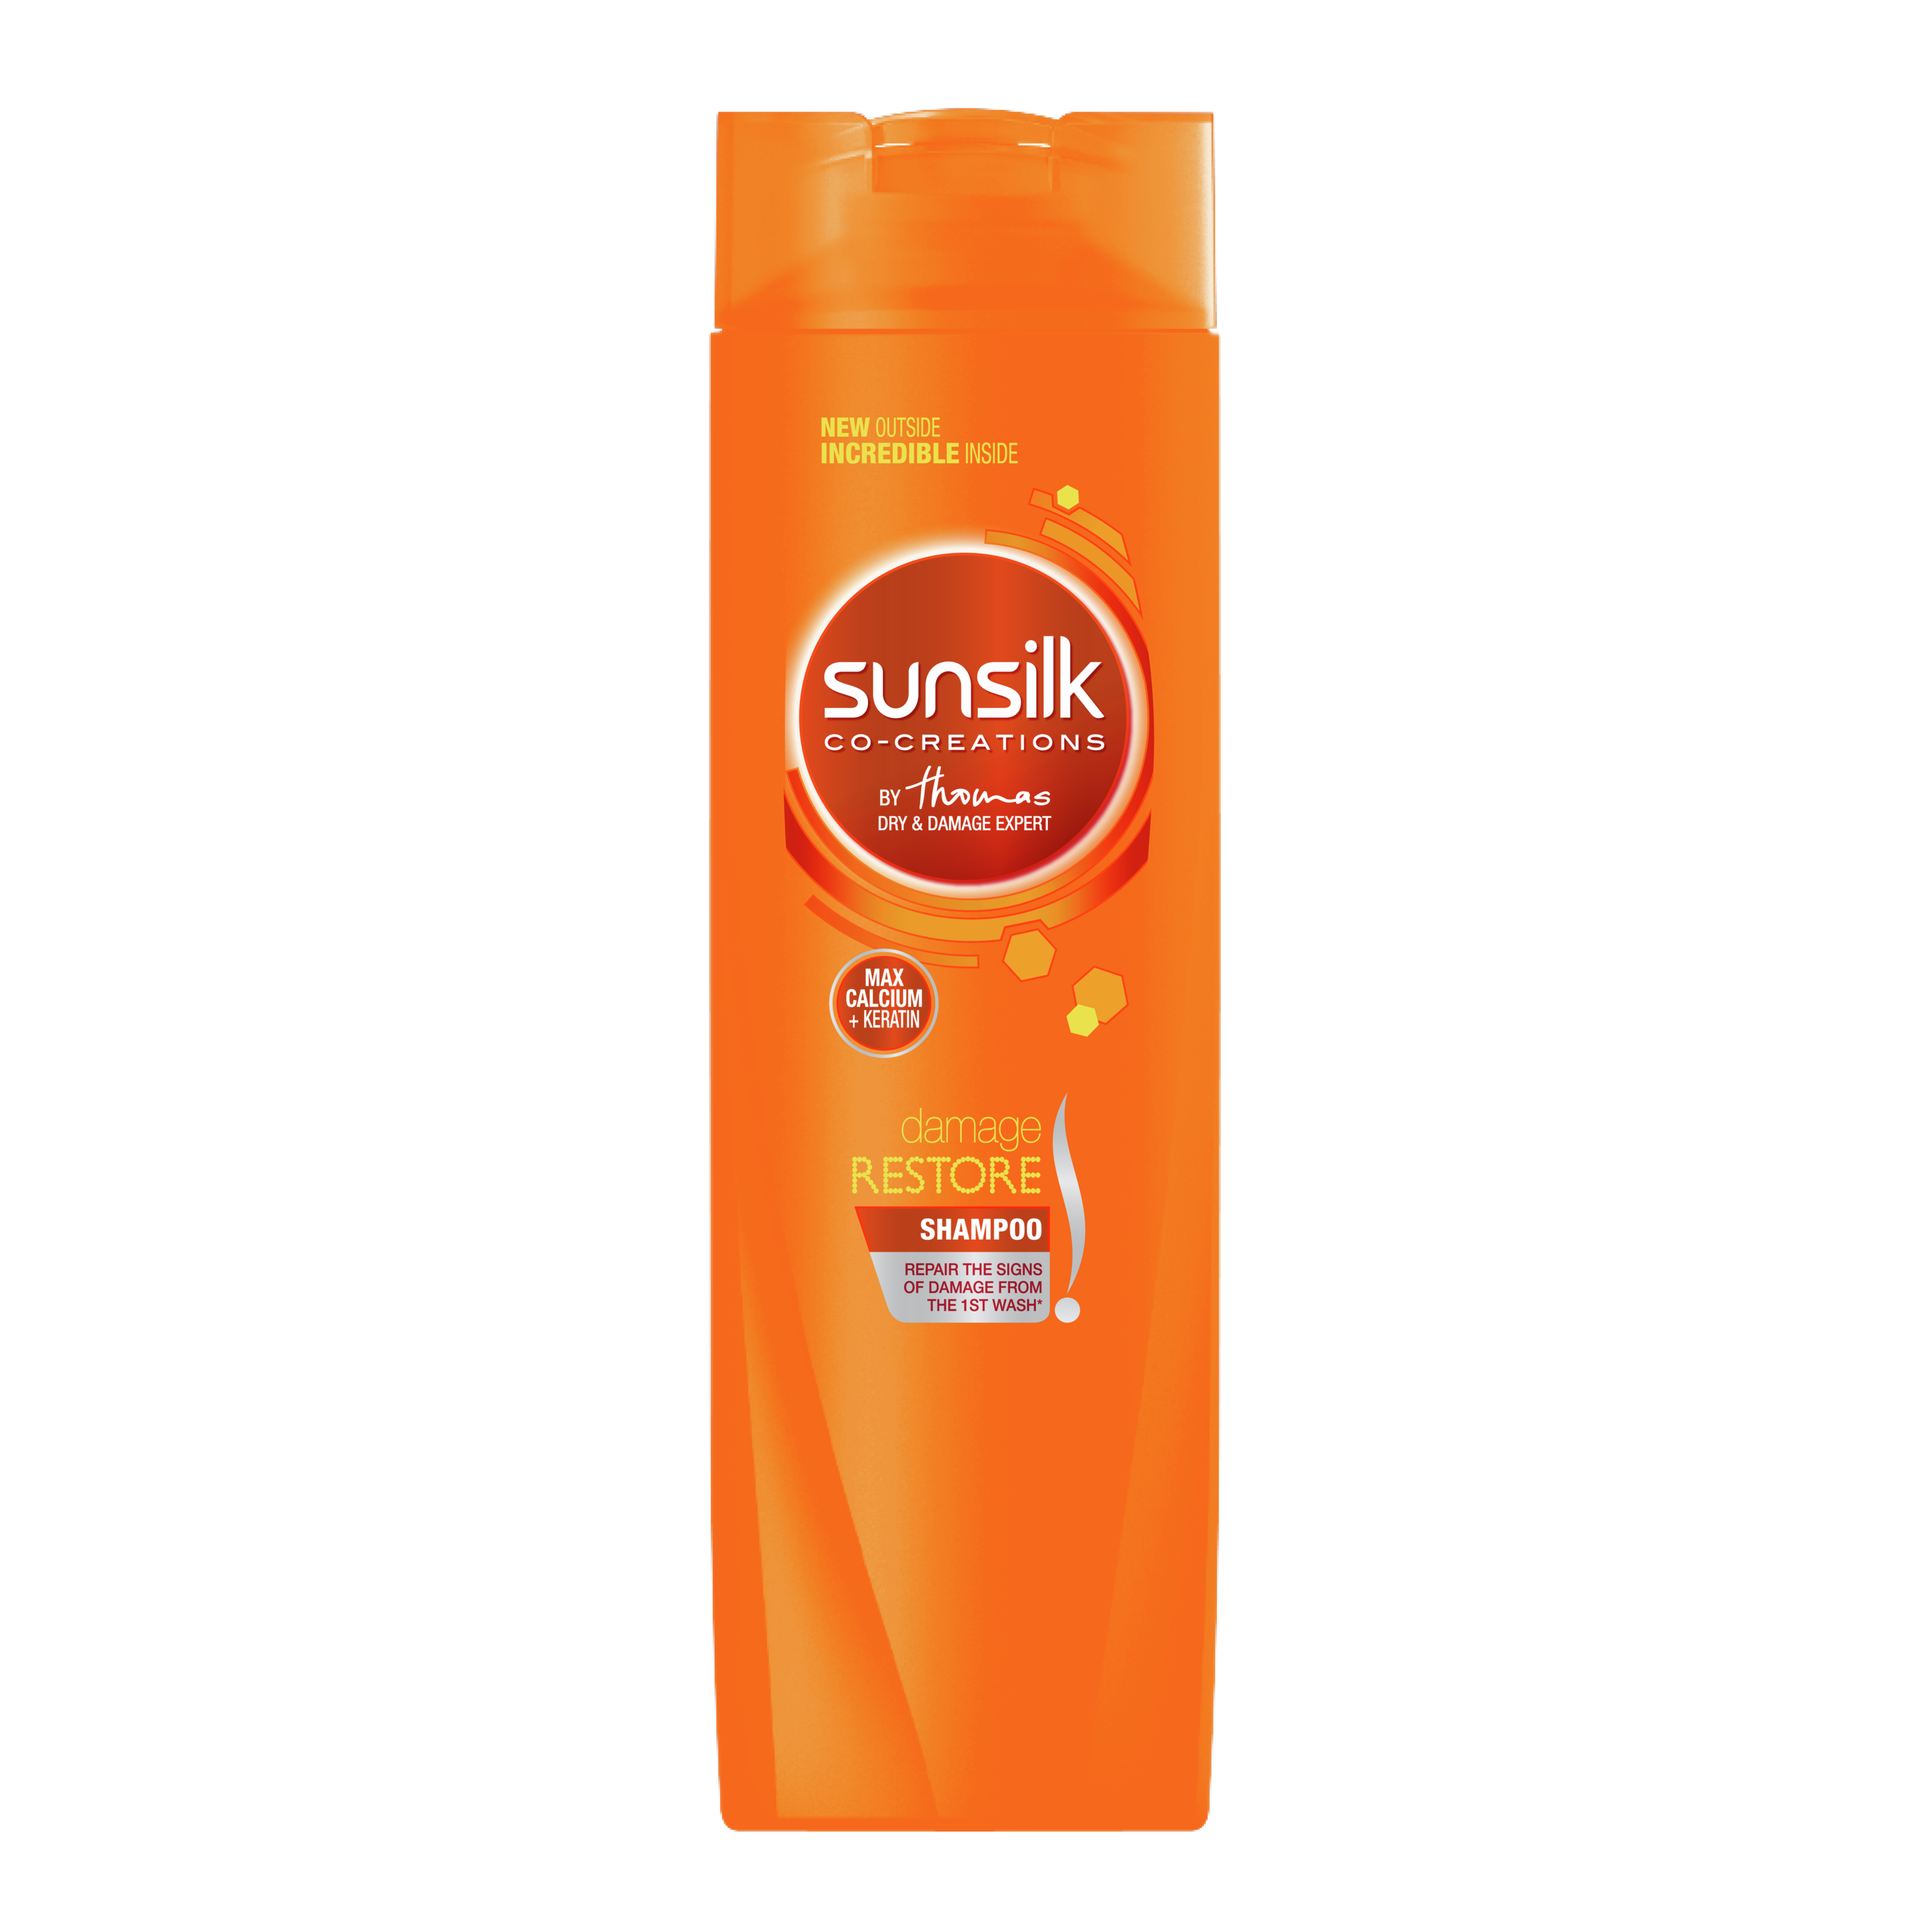 Sunsilk Damage Restore Shampoo  160ml front of pack image